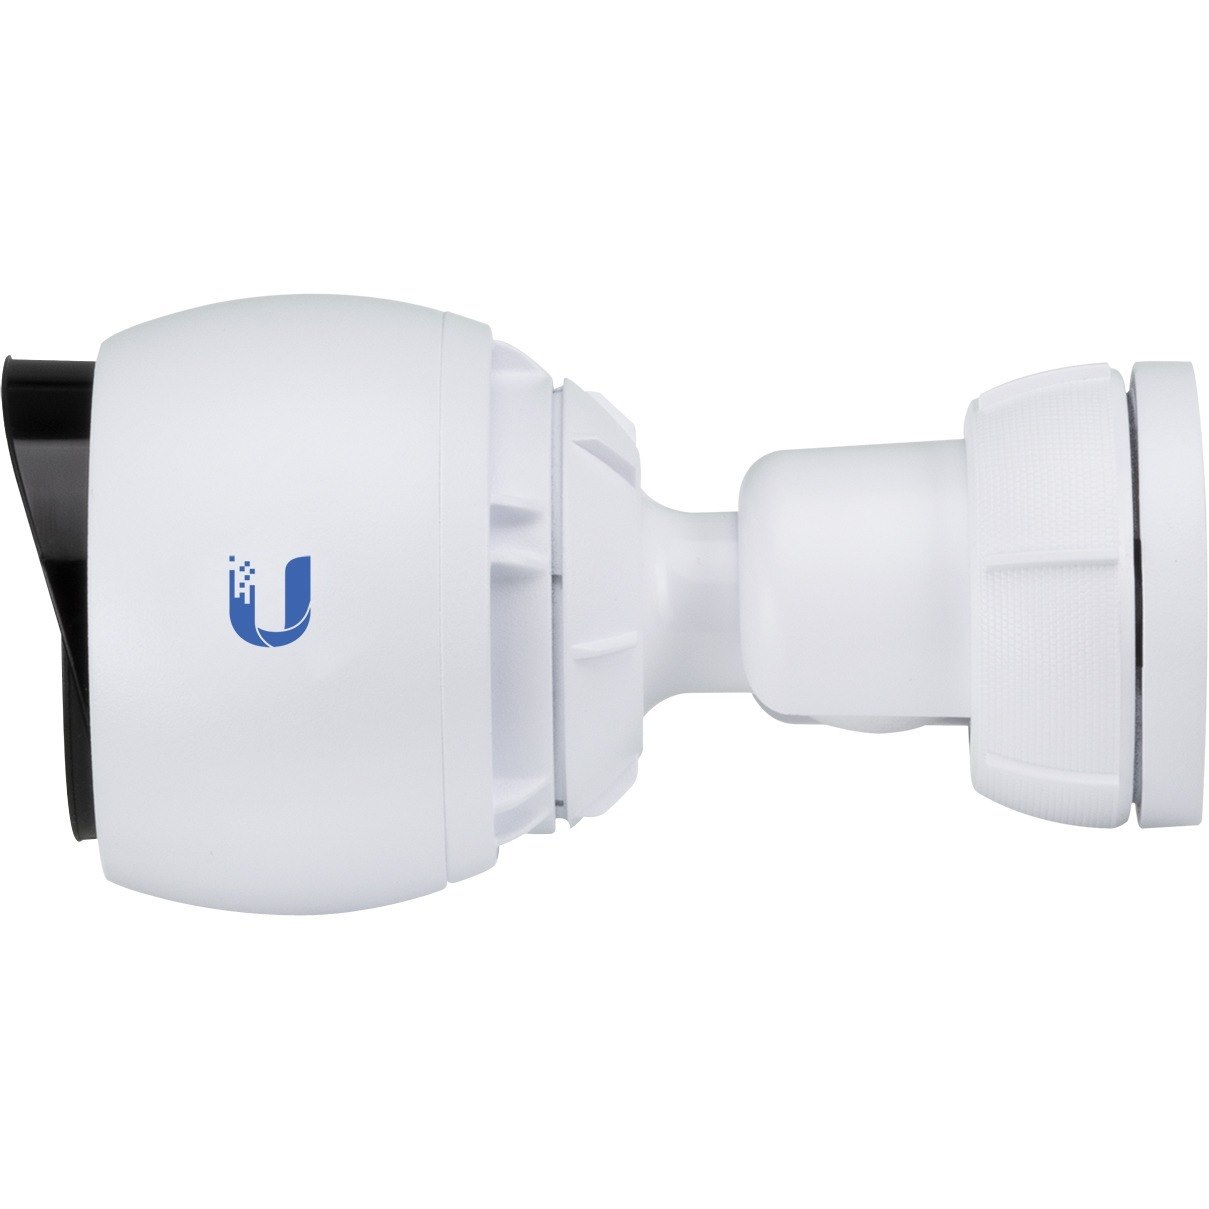 Ubiquiti UniFi Protect G4 4 Megapixel HD Network Camera - 3 Pack - Bullet